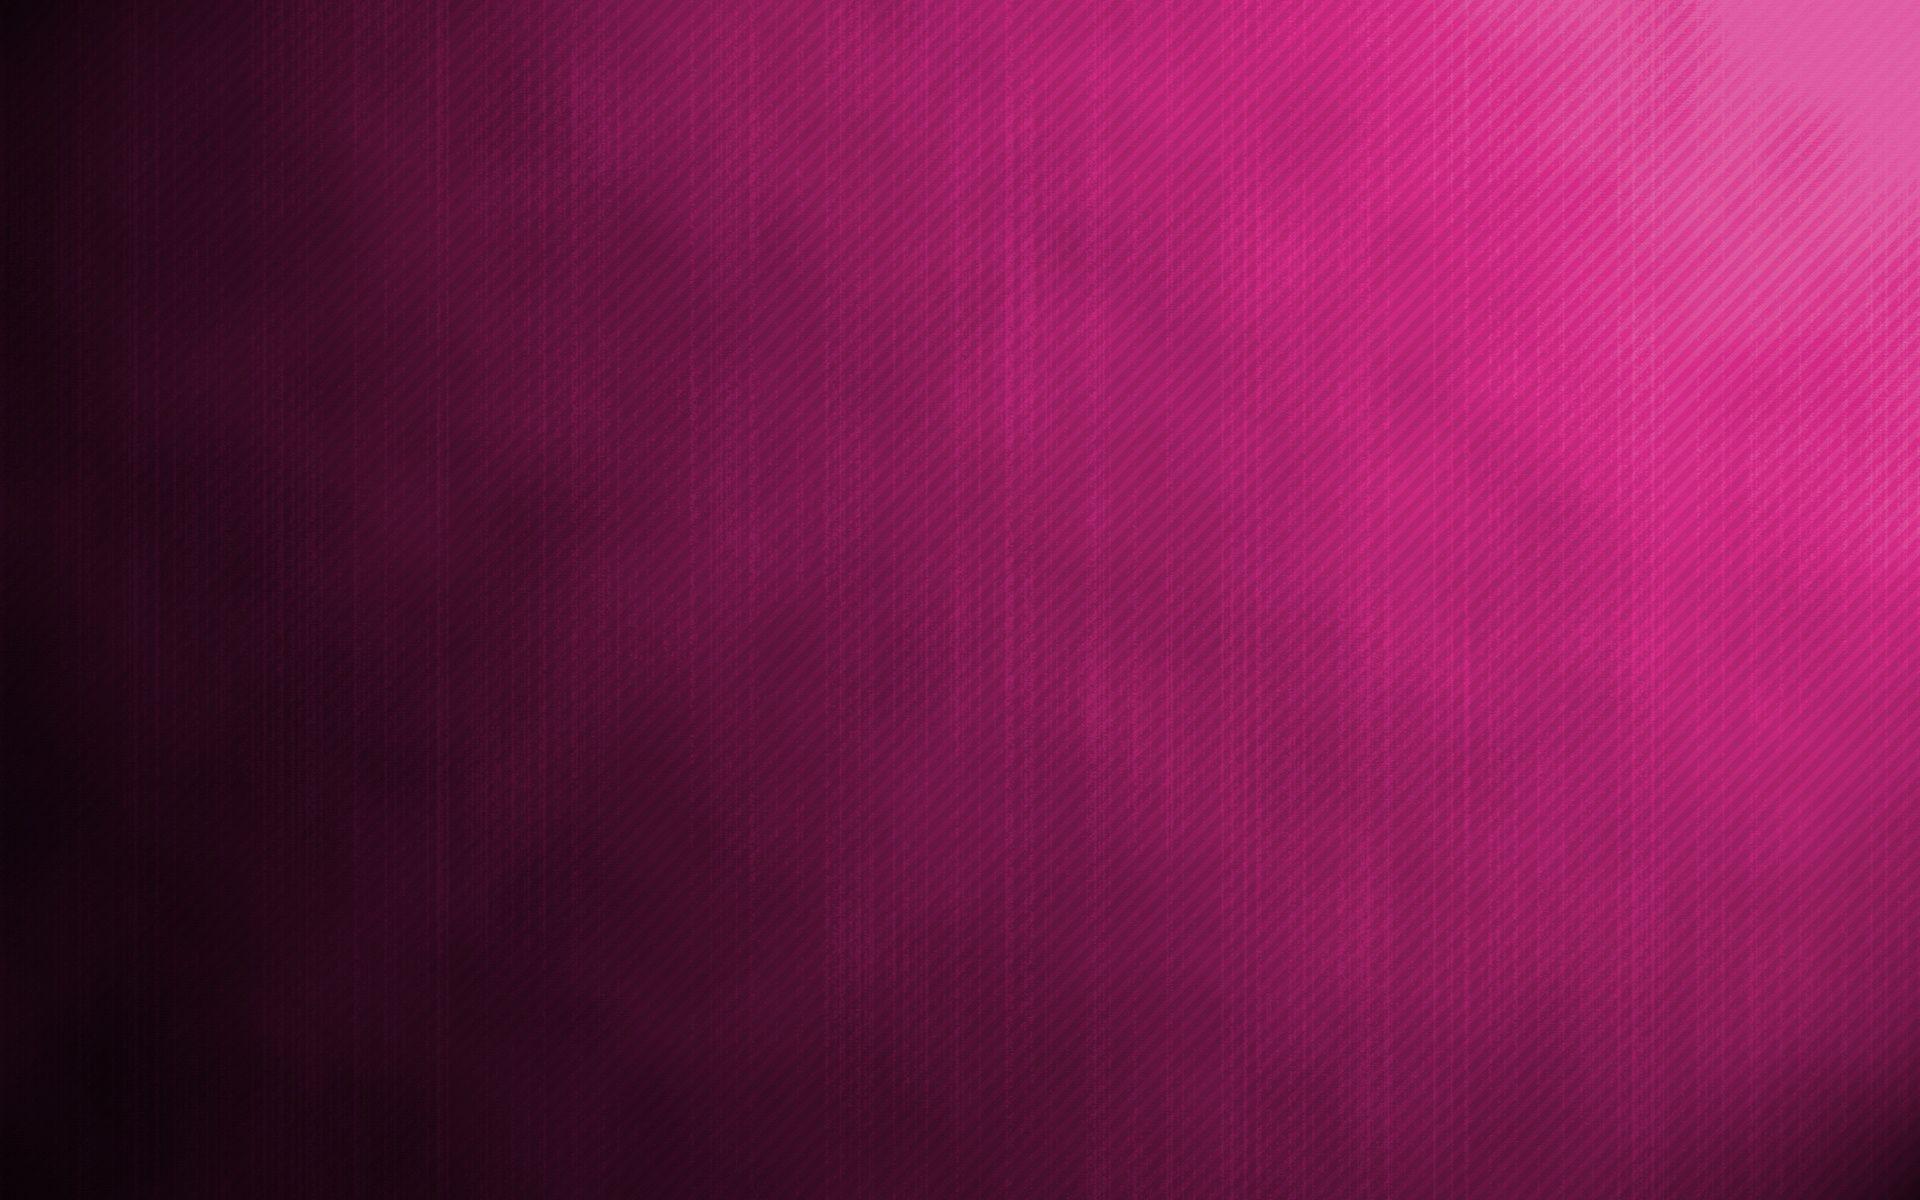 Pink Background 15277 1920x1200 px